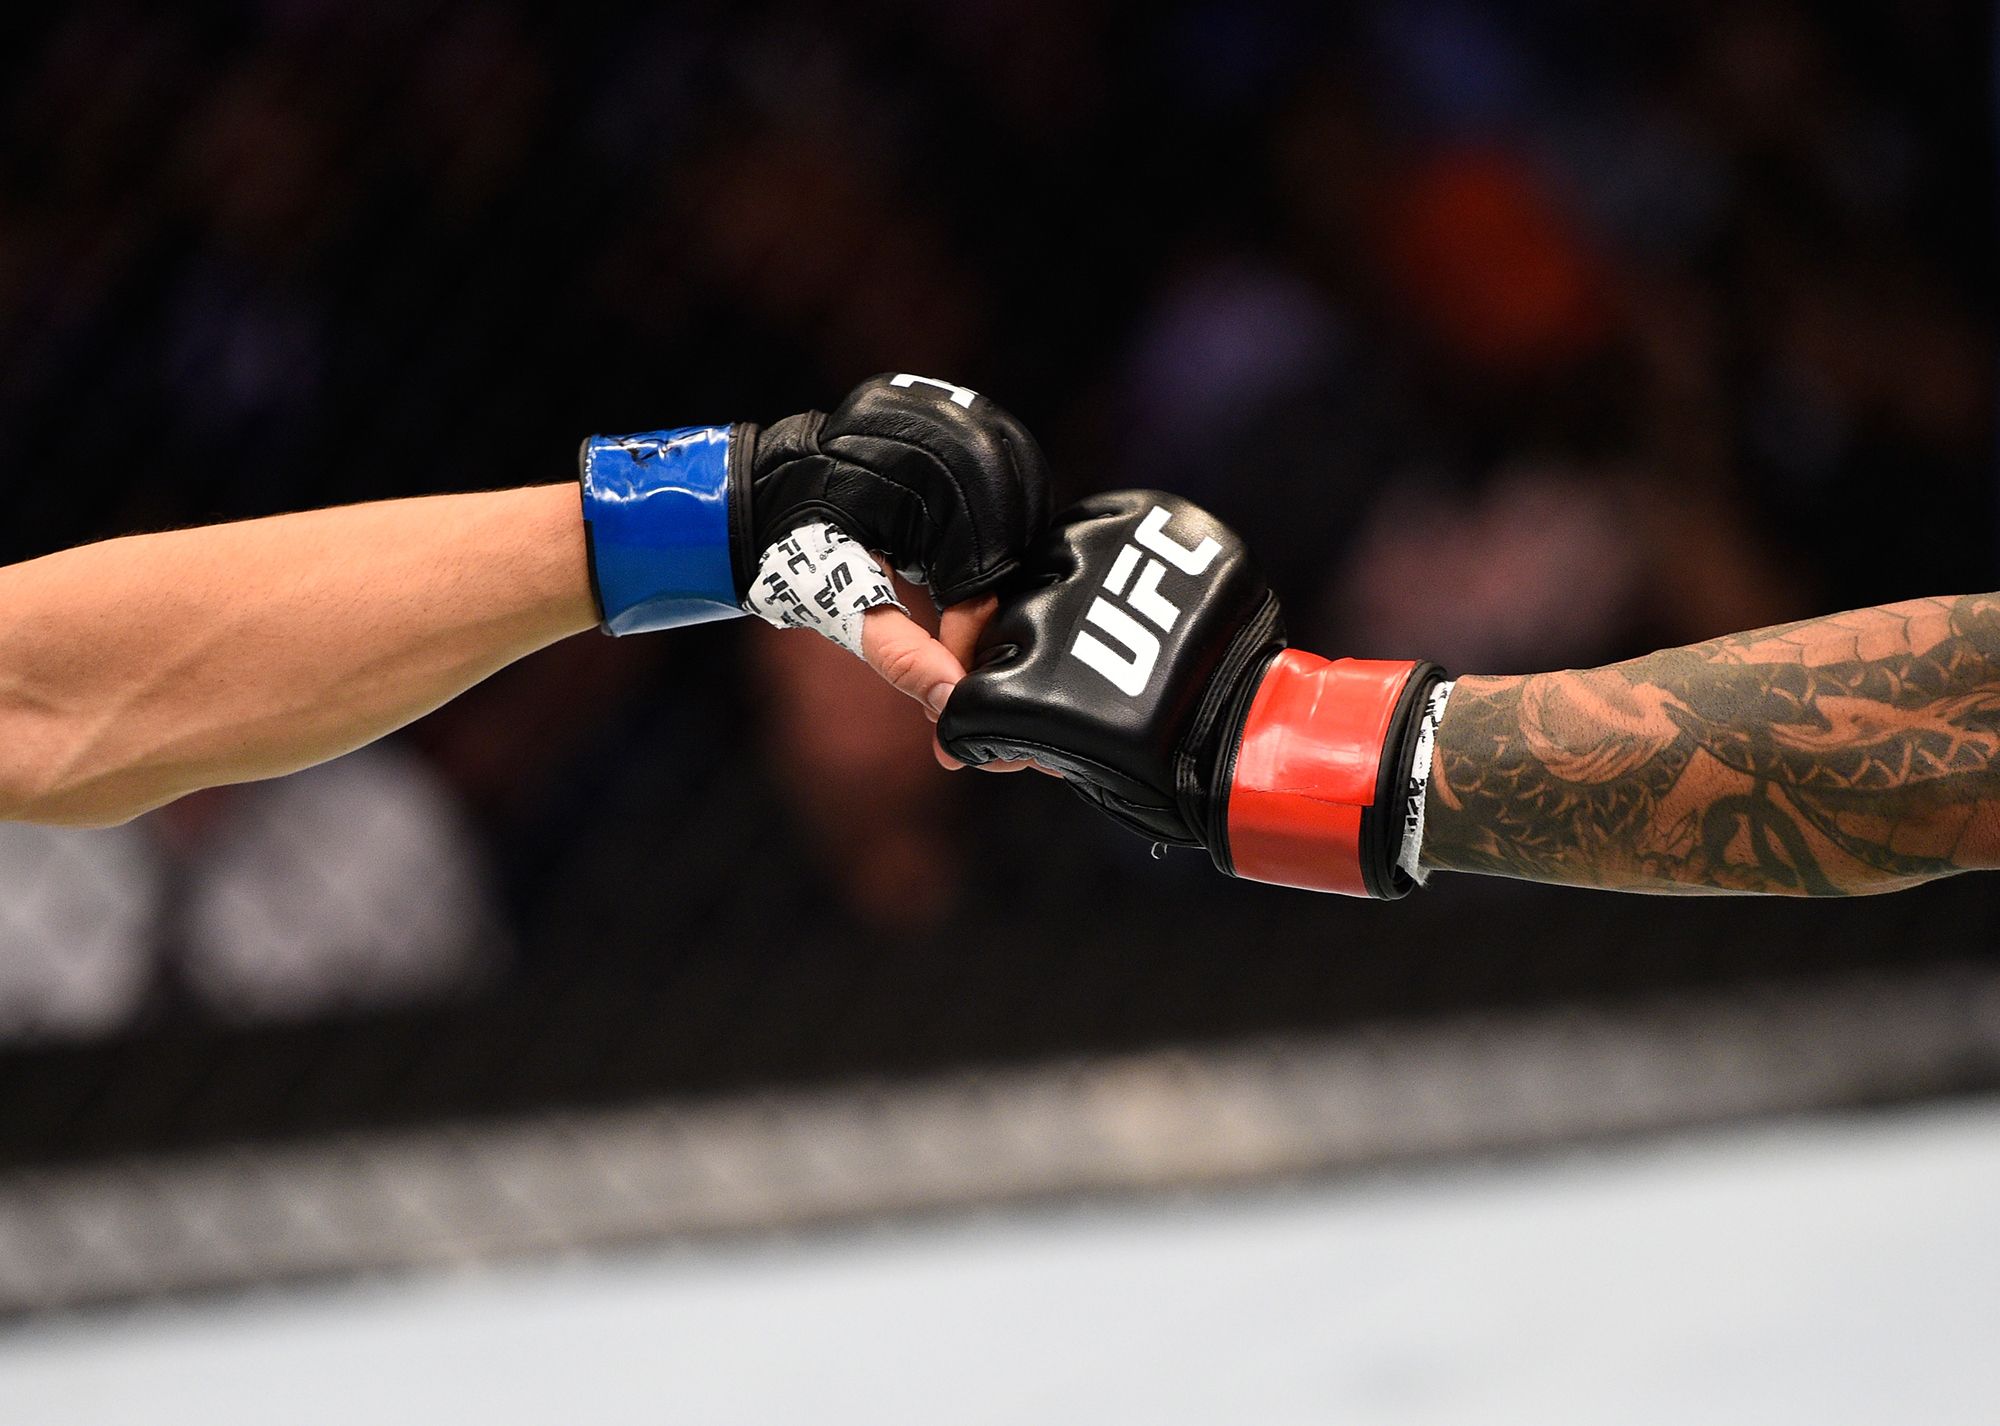 UFC Offical Pro Fight Gloves